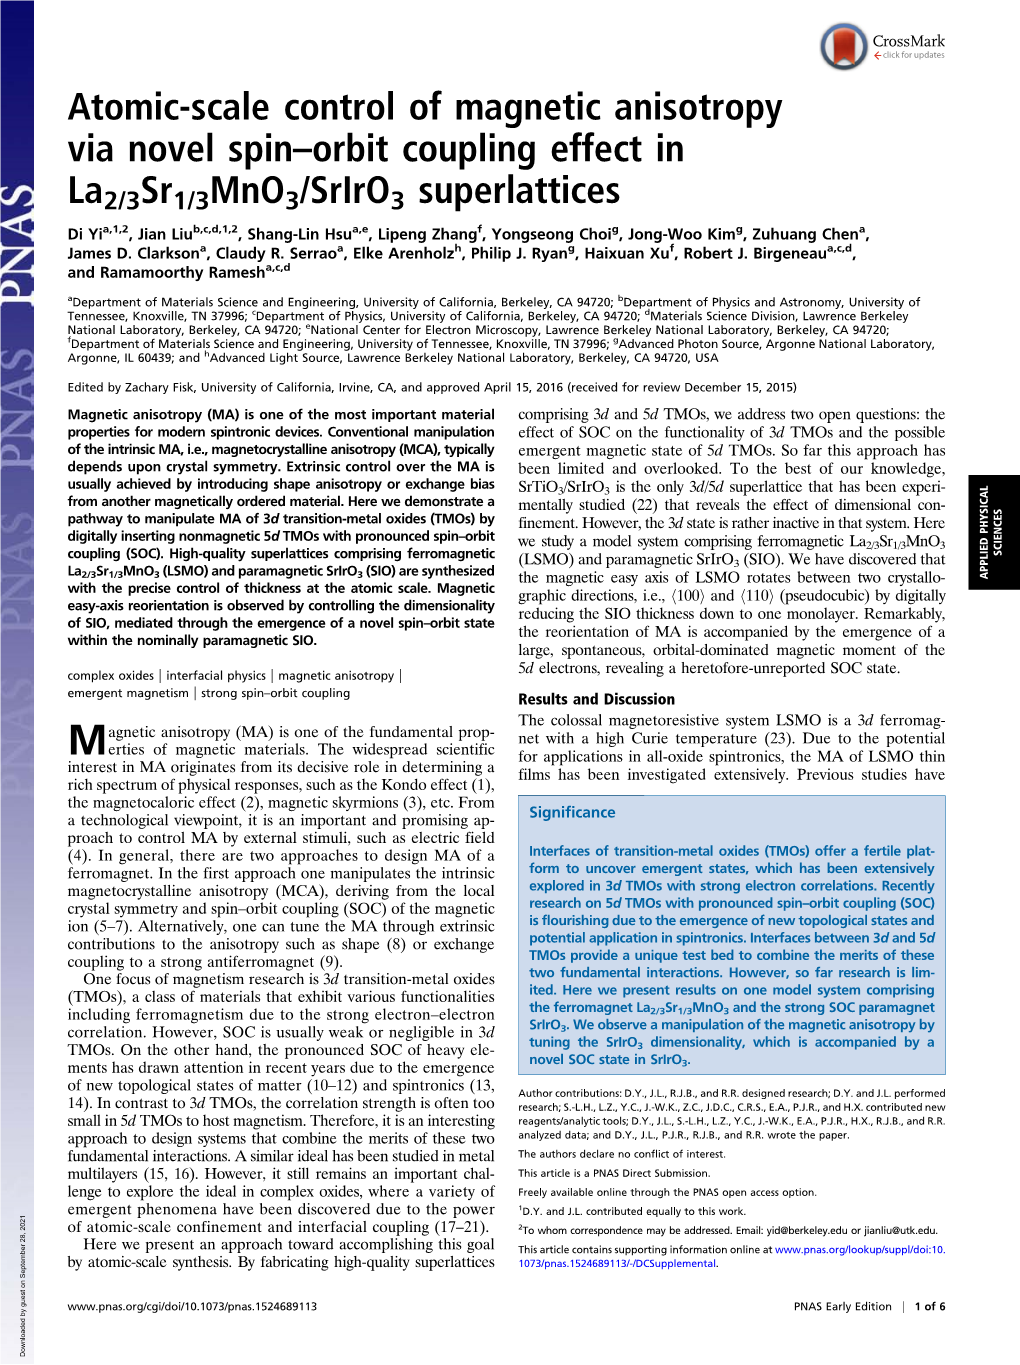 Atomic-Scale Control of Magnetic Anisotropy Via Novel Spin–Orbit Coupling Effect in La2/3Sr1/3Mno3/Sriro3 Superlattices